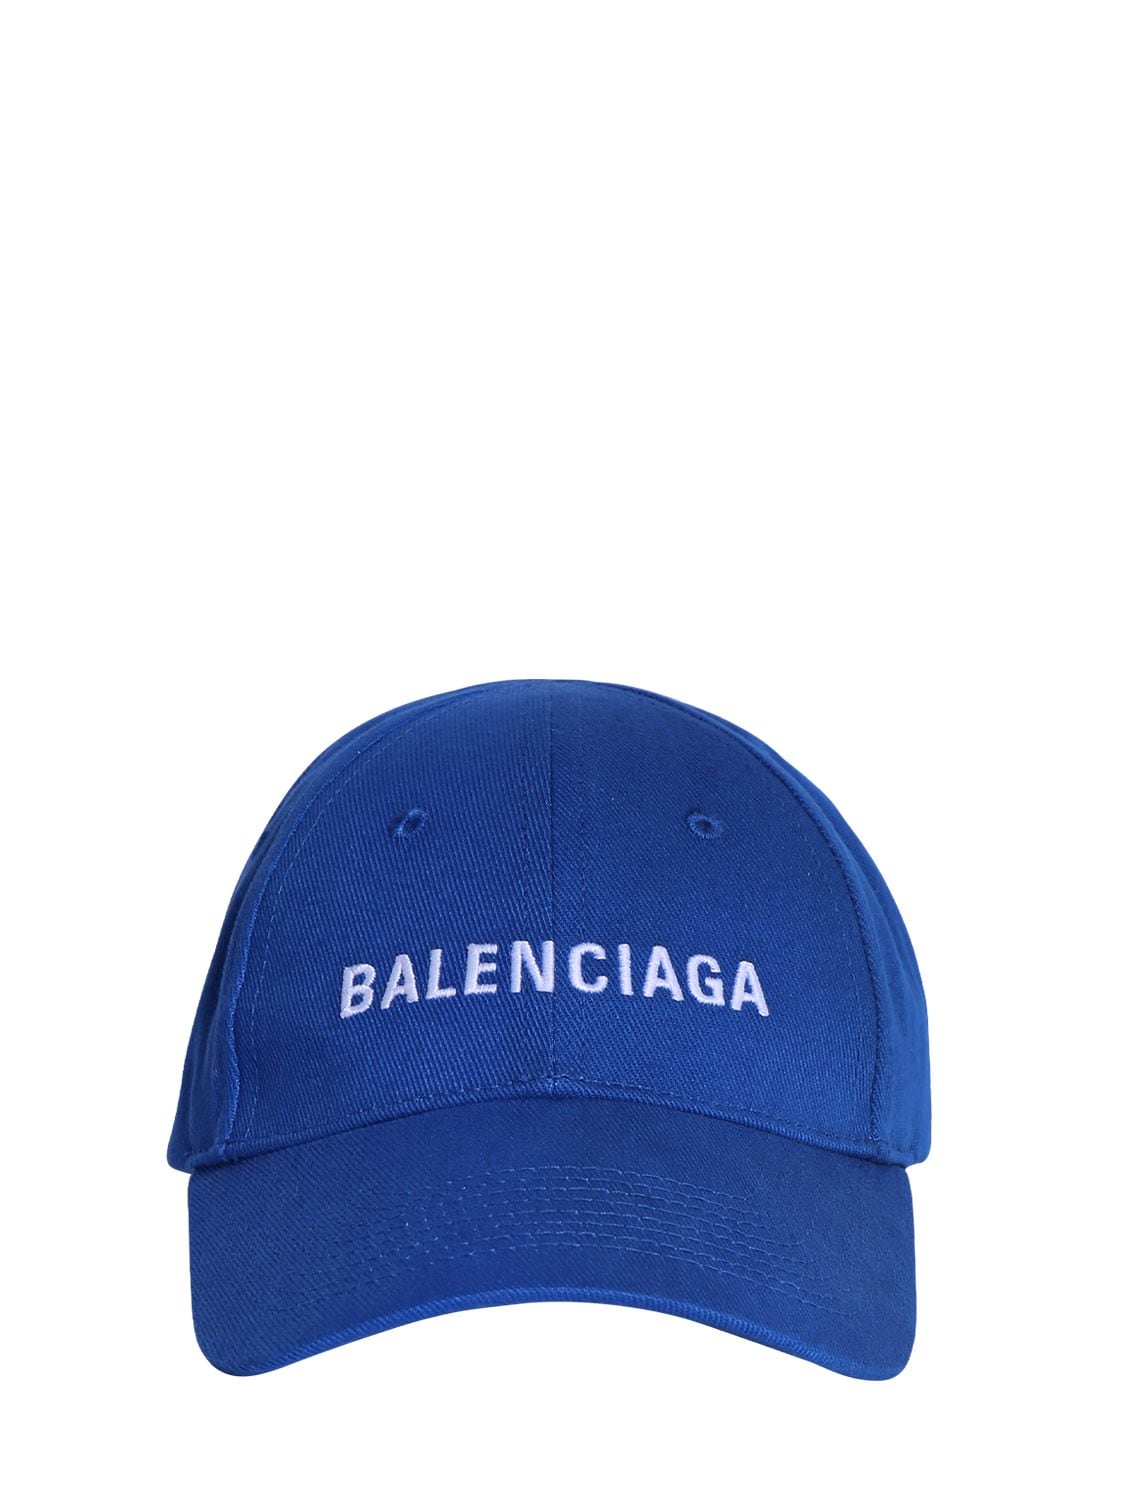 BALENCIAGA LOGO刺绣有机棉棒球帽,71IOFX001-NDI3NW2